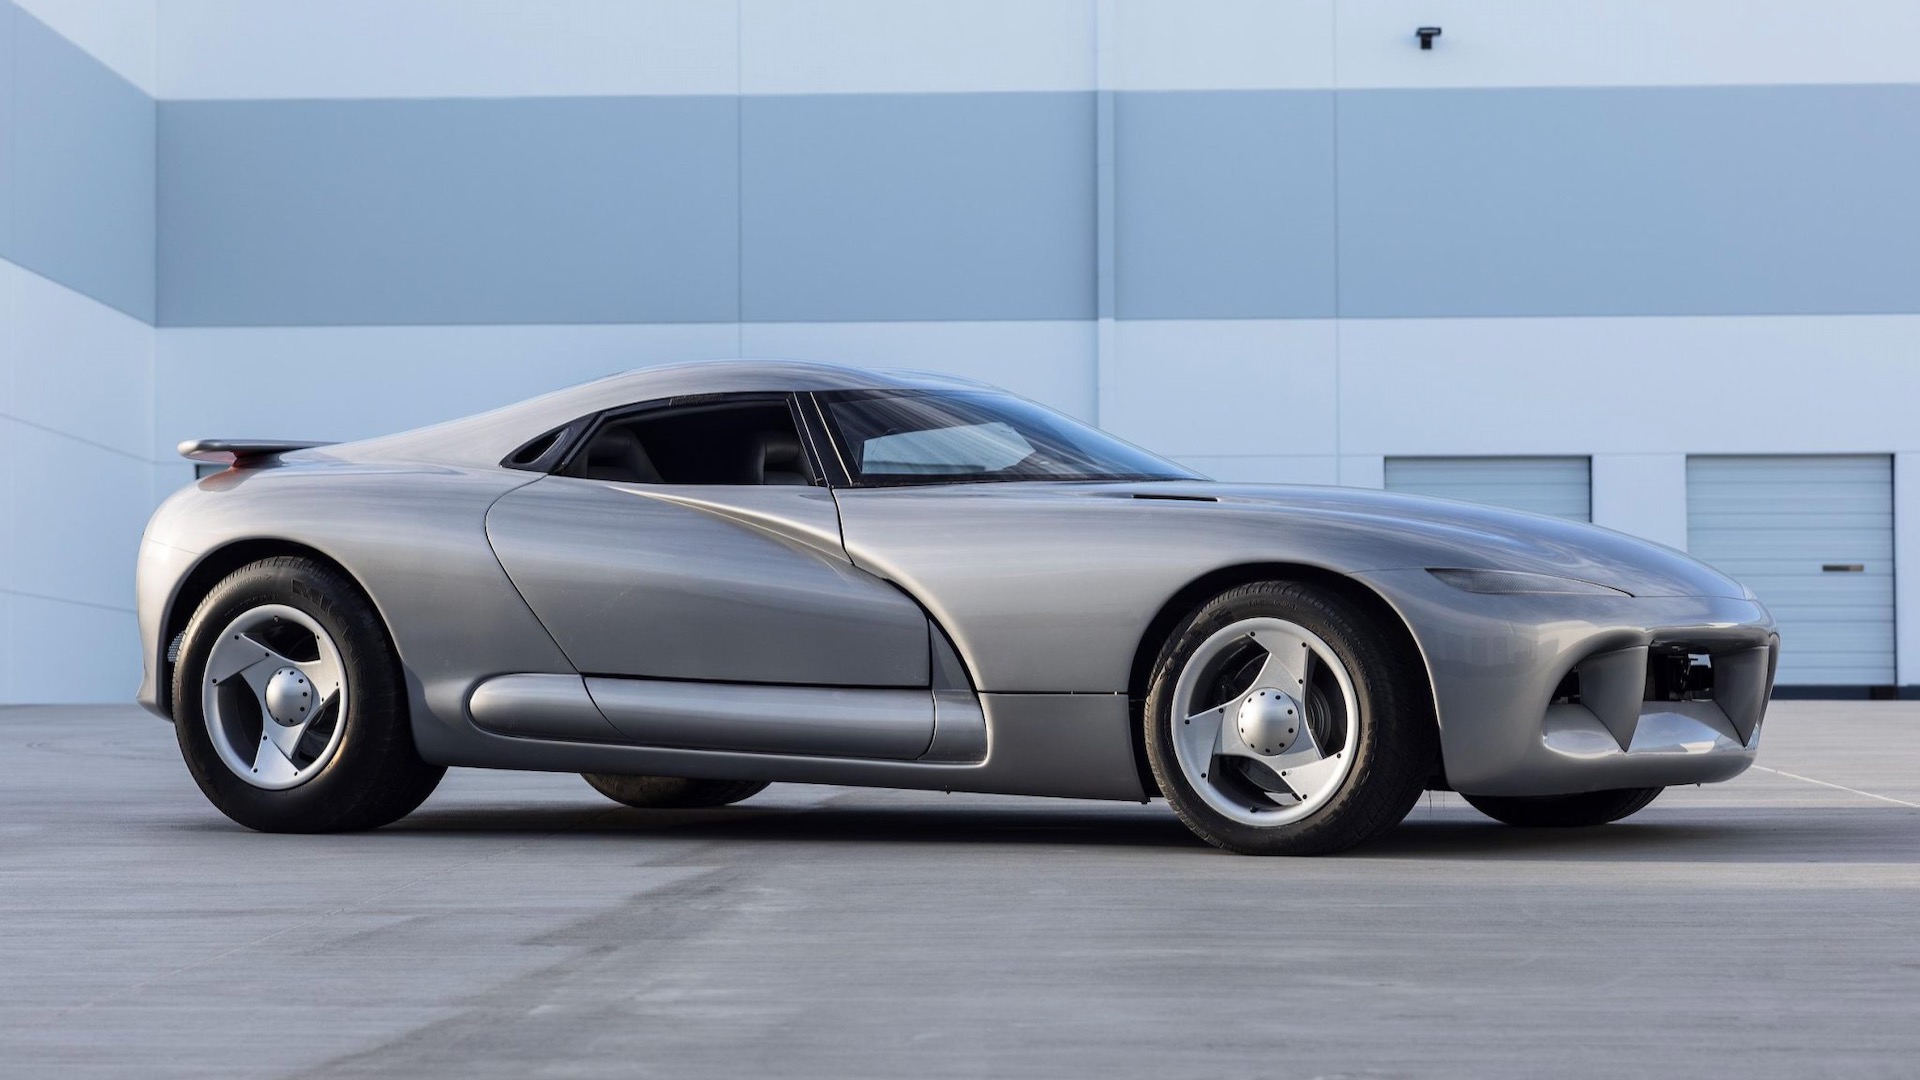 “Viper” TV show Defender prop car up for auction Auto Recent